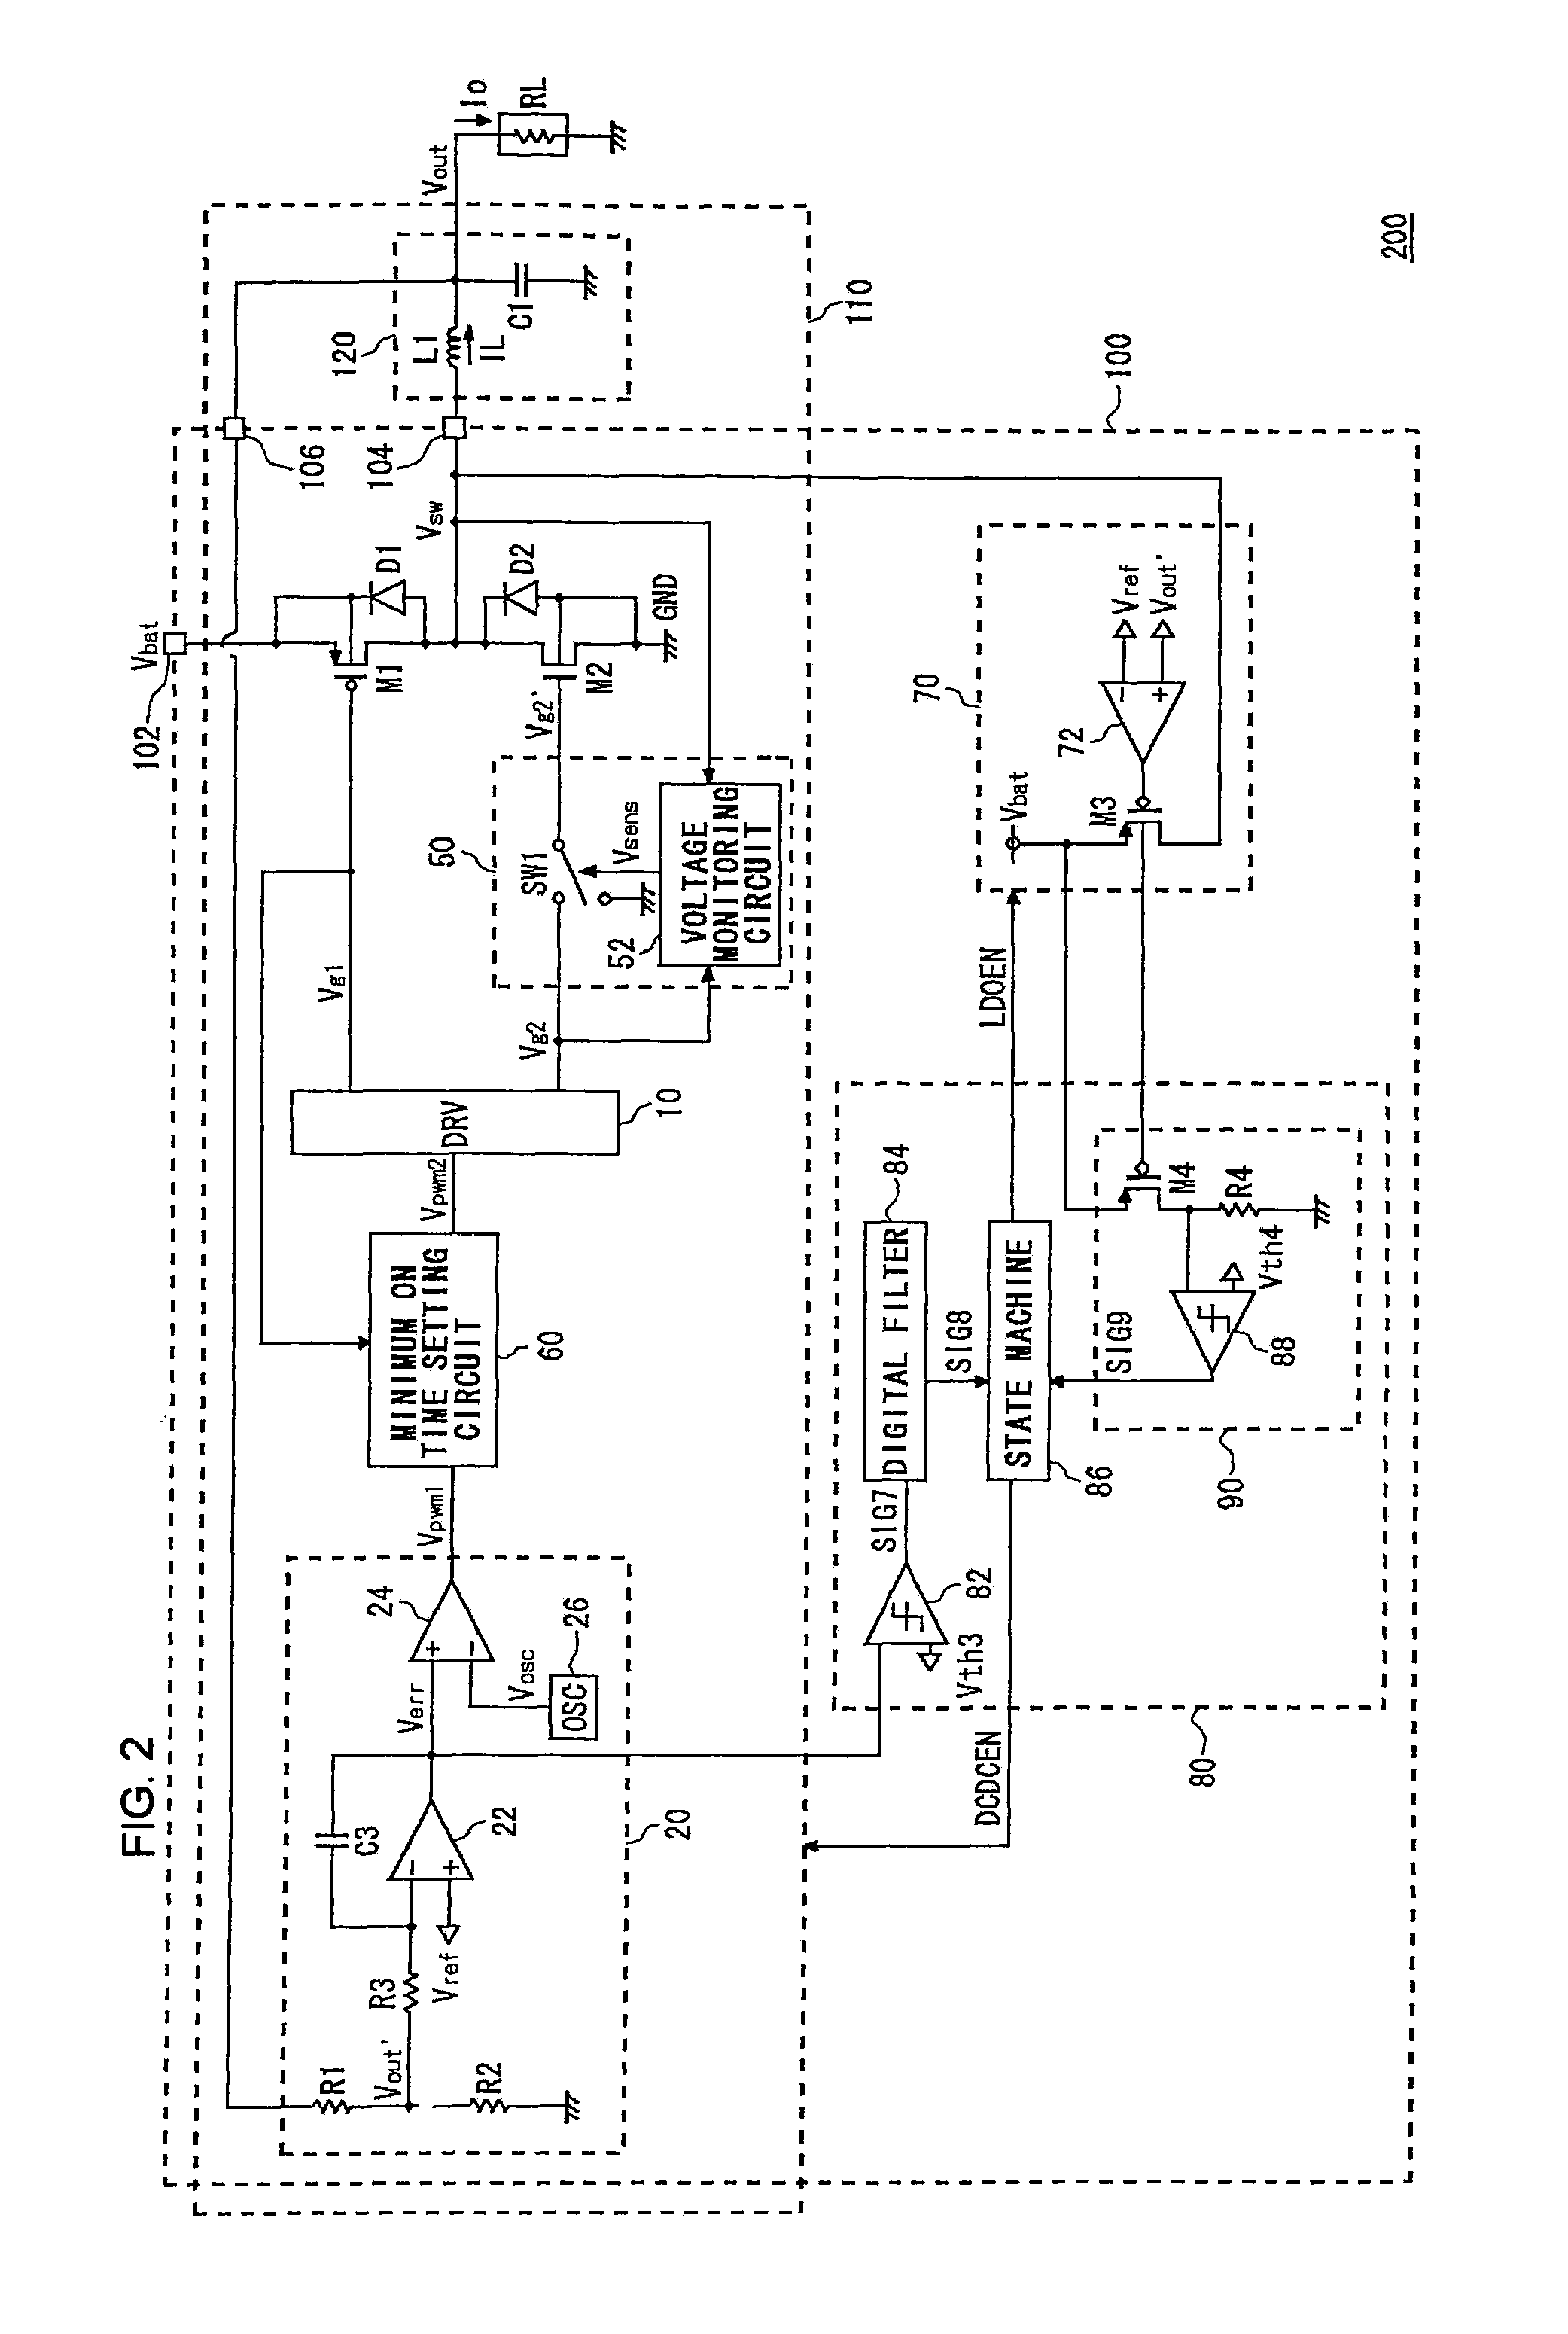 Power supply apparatus having switchable switching regulator and linear regulator